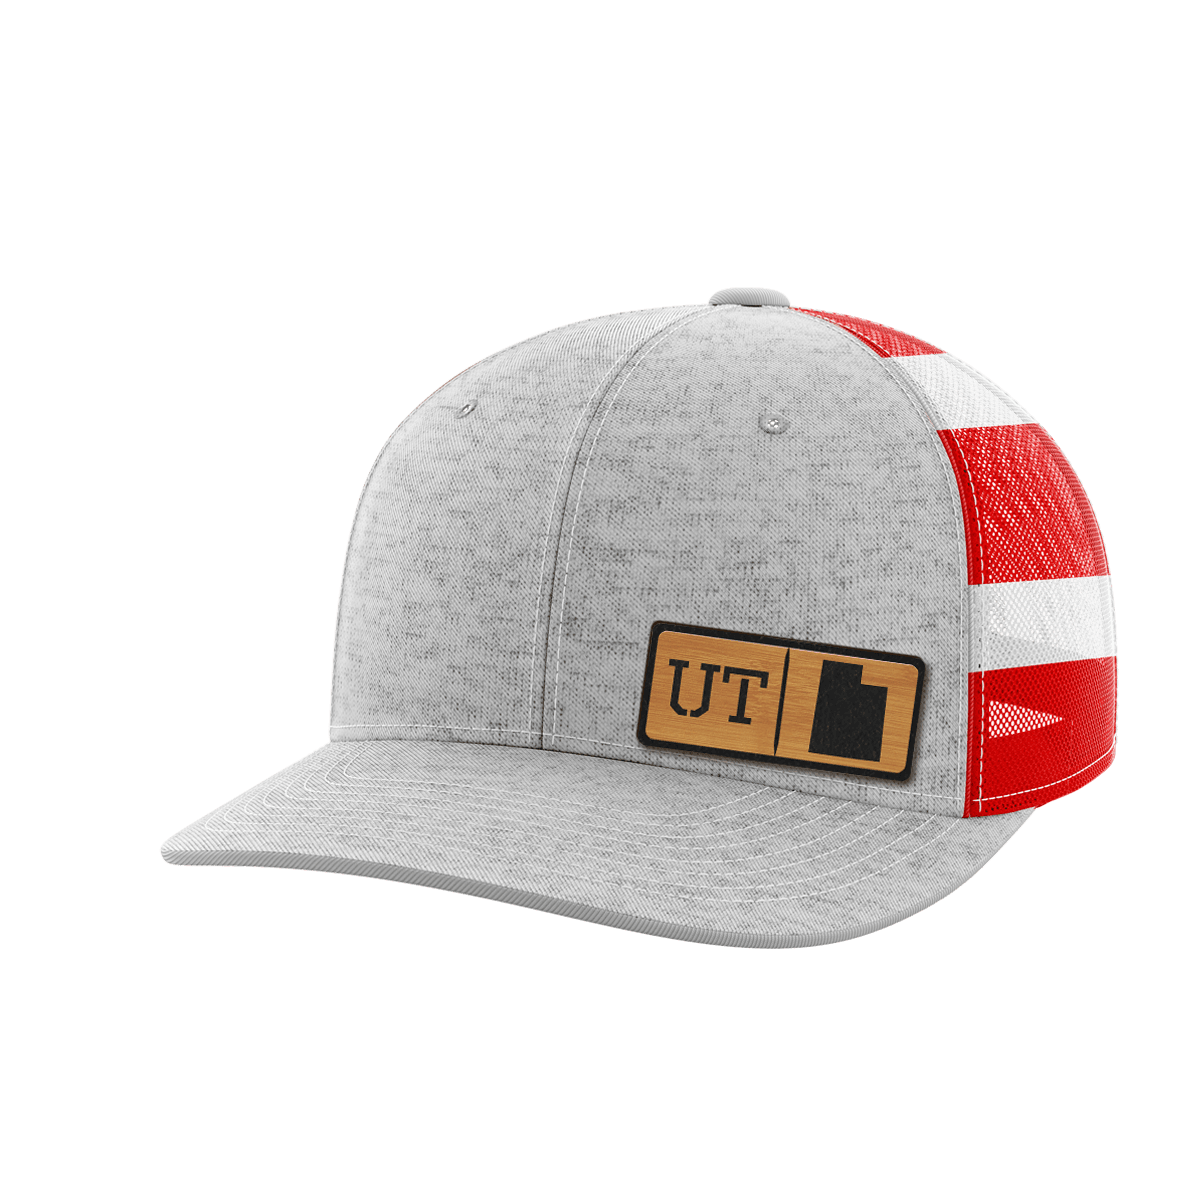 Utah Homegrown Hats - Greater Half